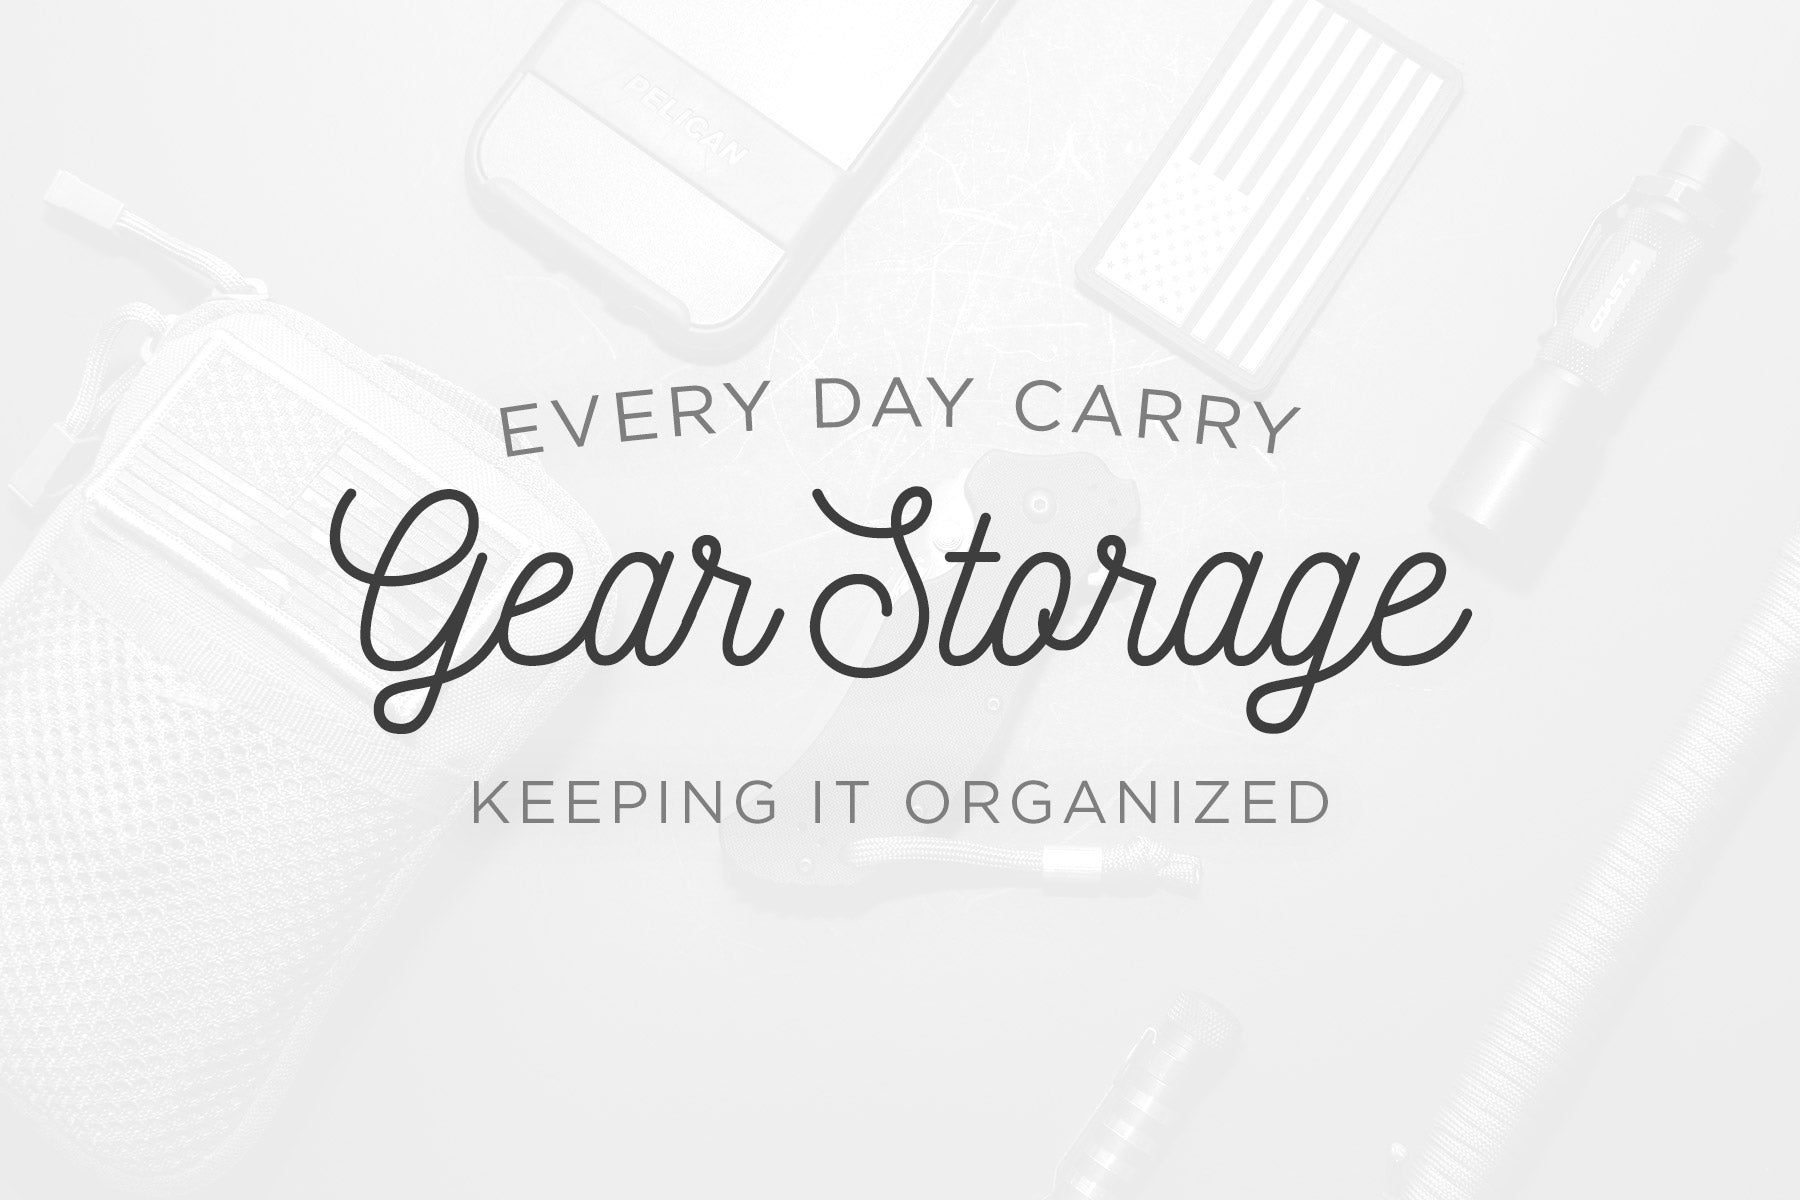 EDC Gear Storage